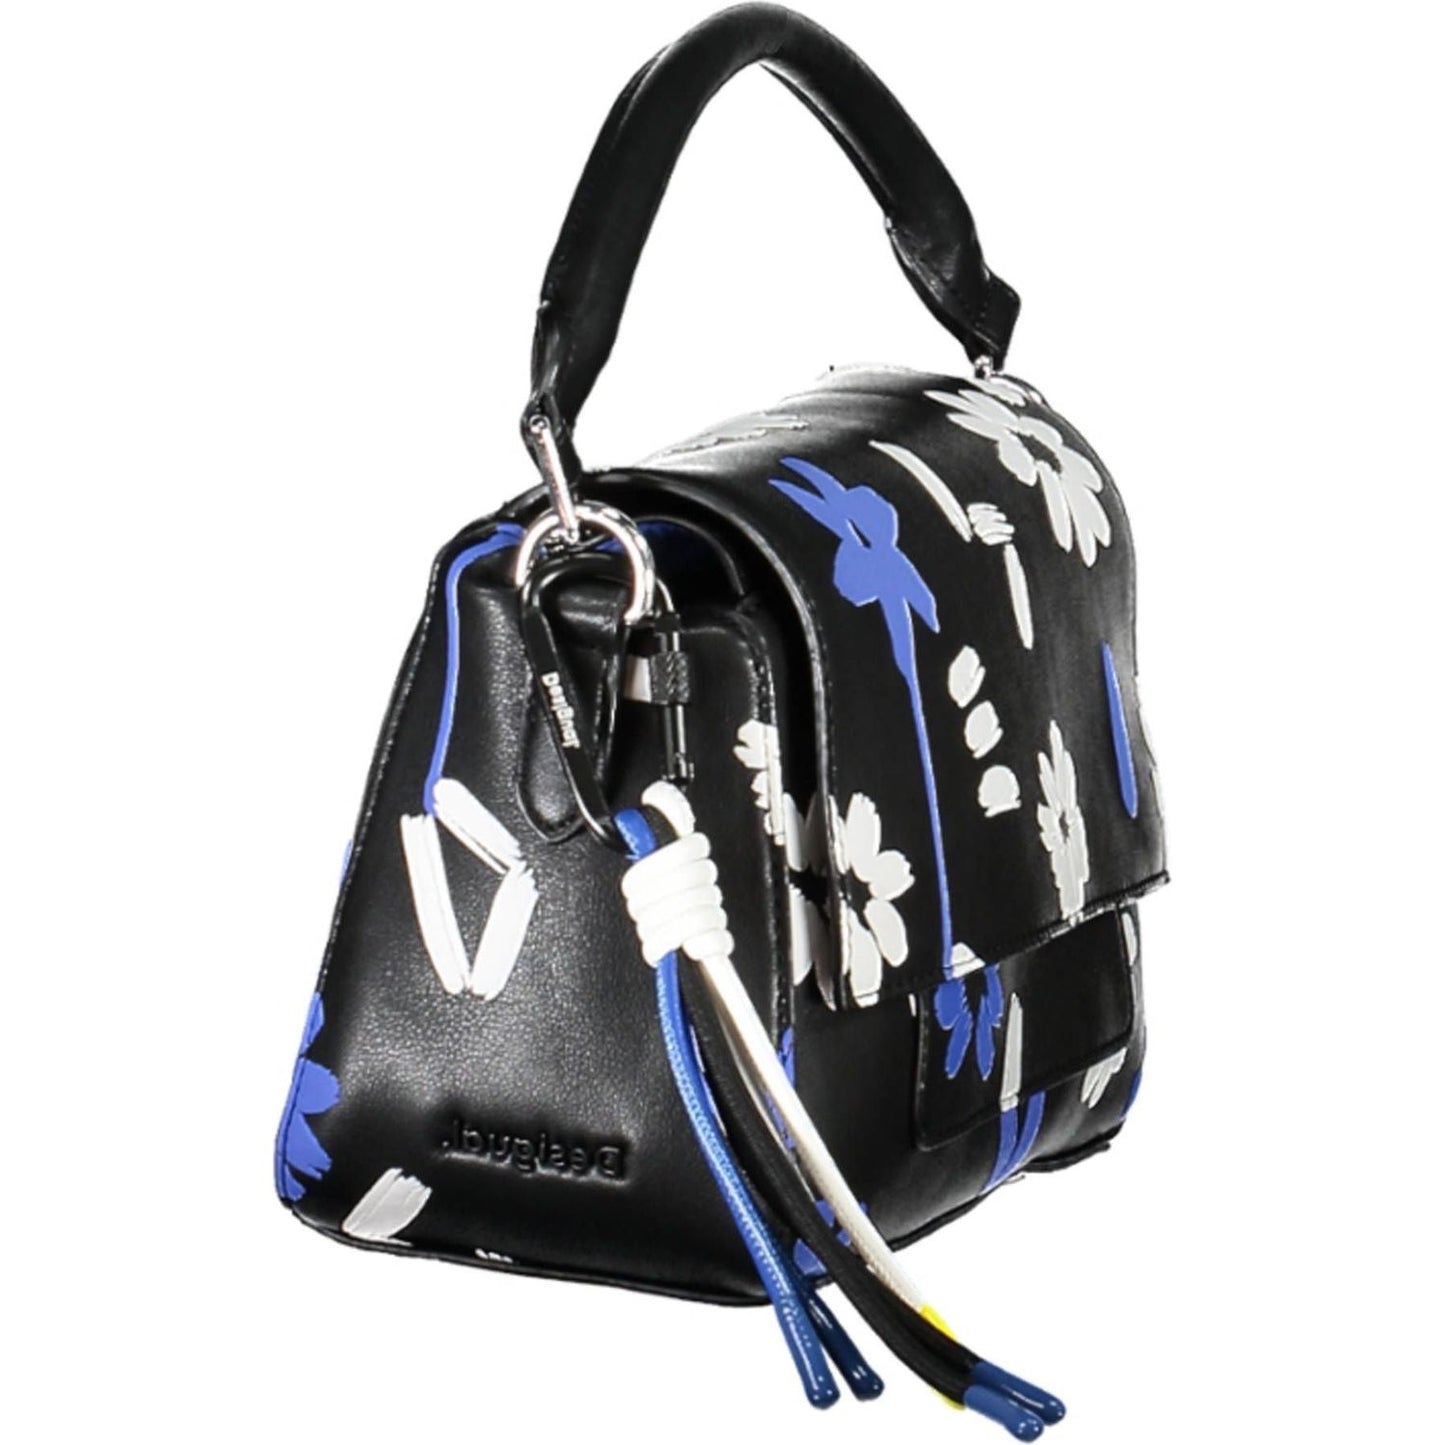 Desigual Chic Black Polyurethane Handbag with Contrasting Details chic-black-polyurethane-handbag-with-contrasting-details